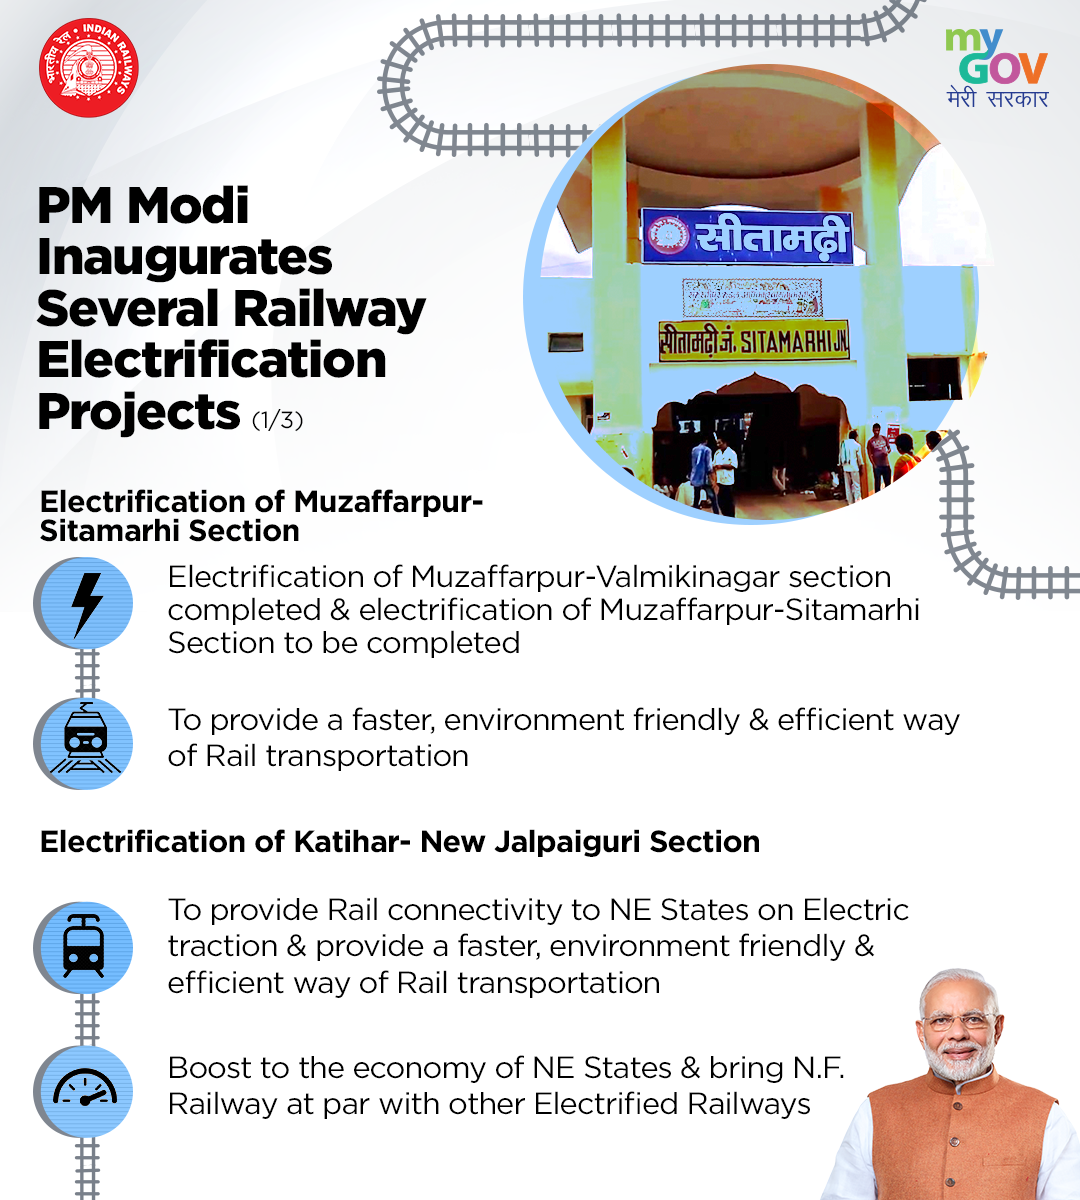 PM Modi Inaugurates Several Railway Electrification Projects (1/3) #AatmaNirbharBihar #BiharKaPragatiPath